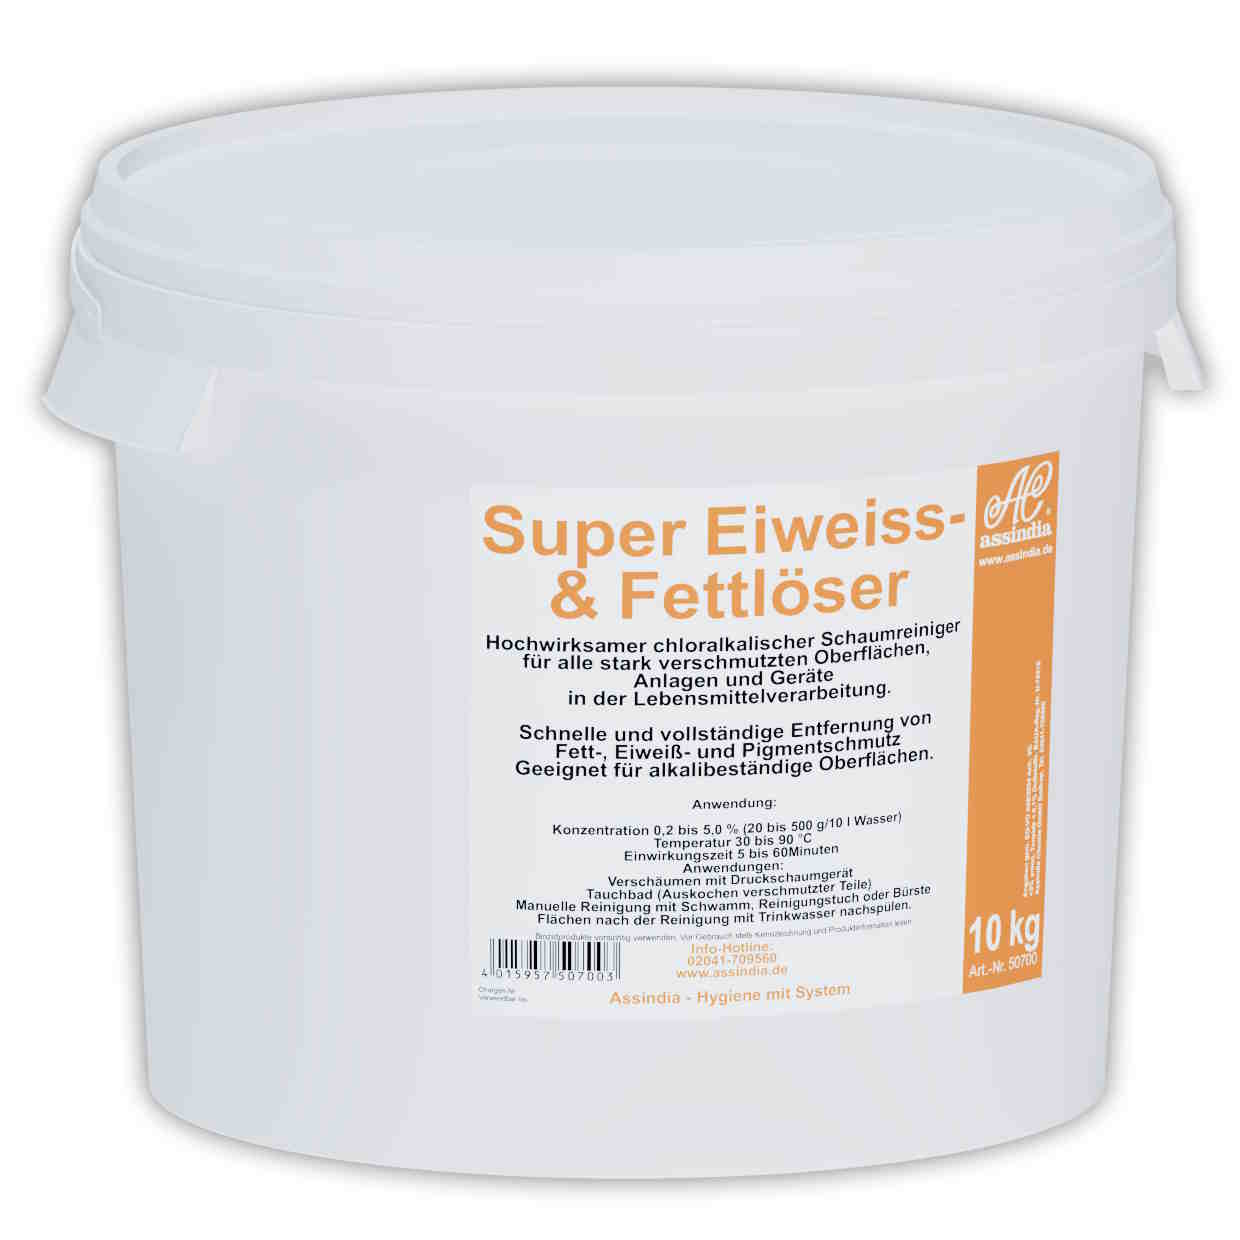  Super Eiweiß- & Fettlöser (alk. Schaumreiniger) 10kg 